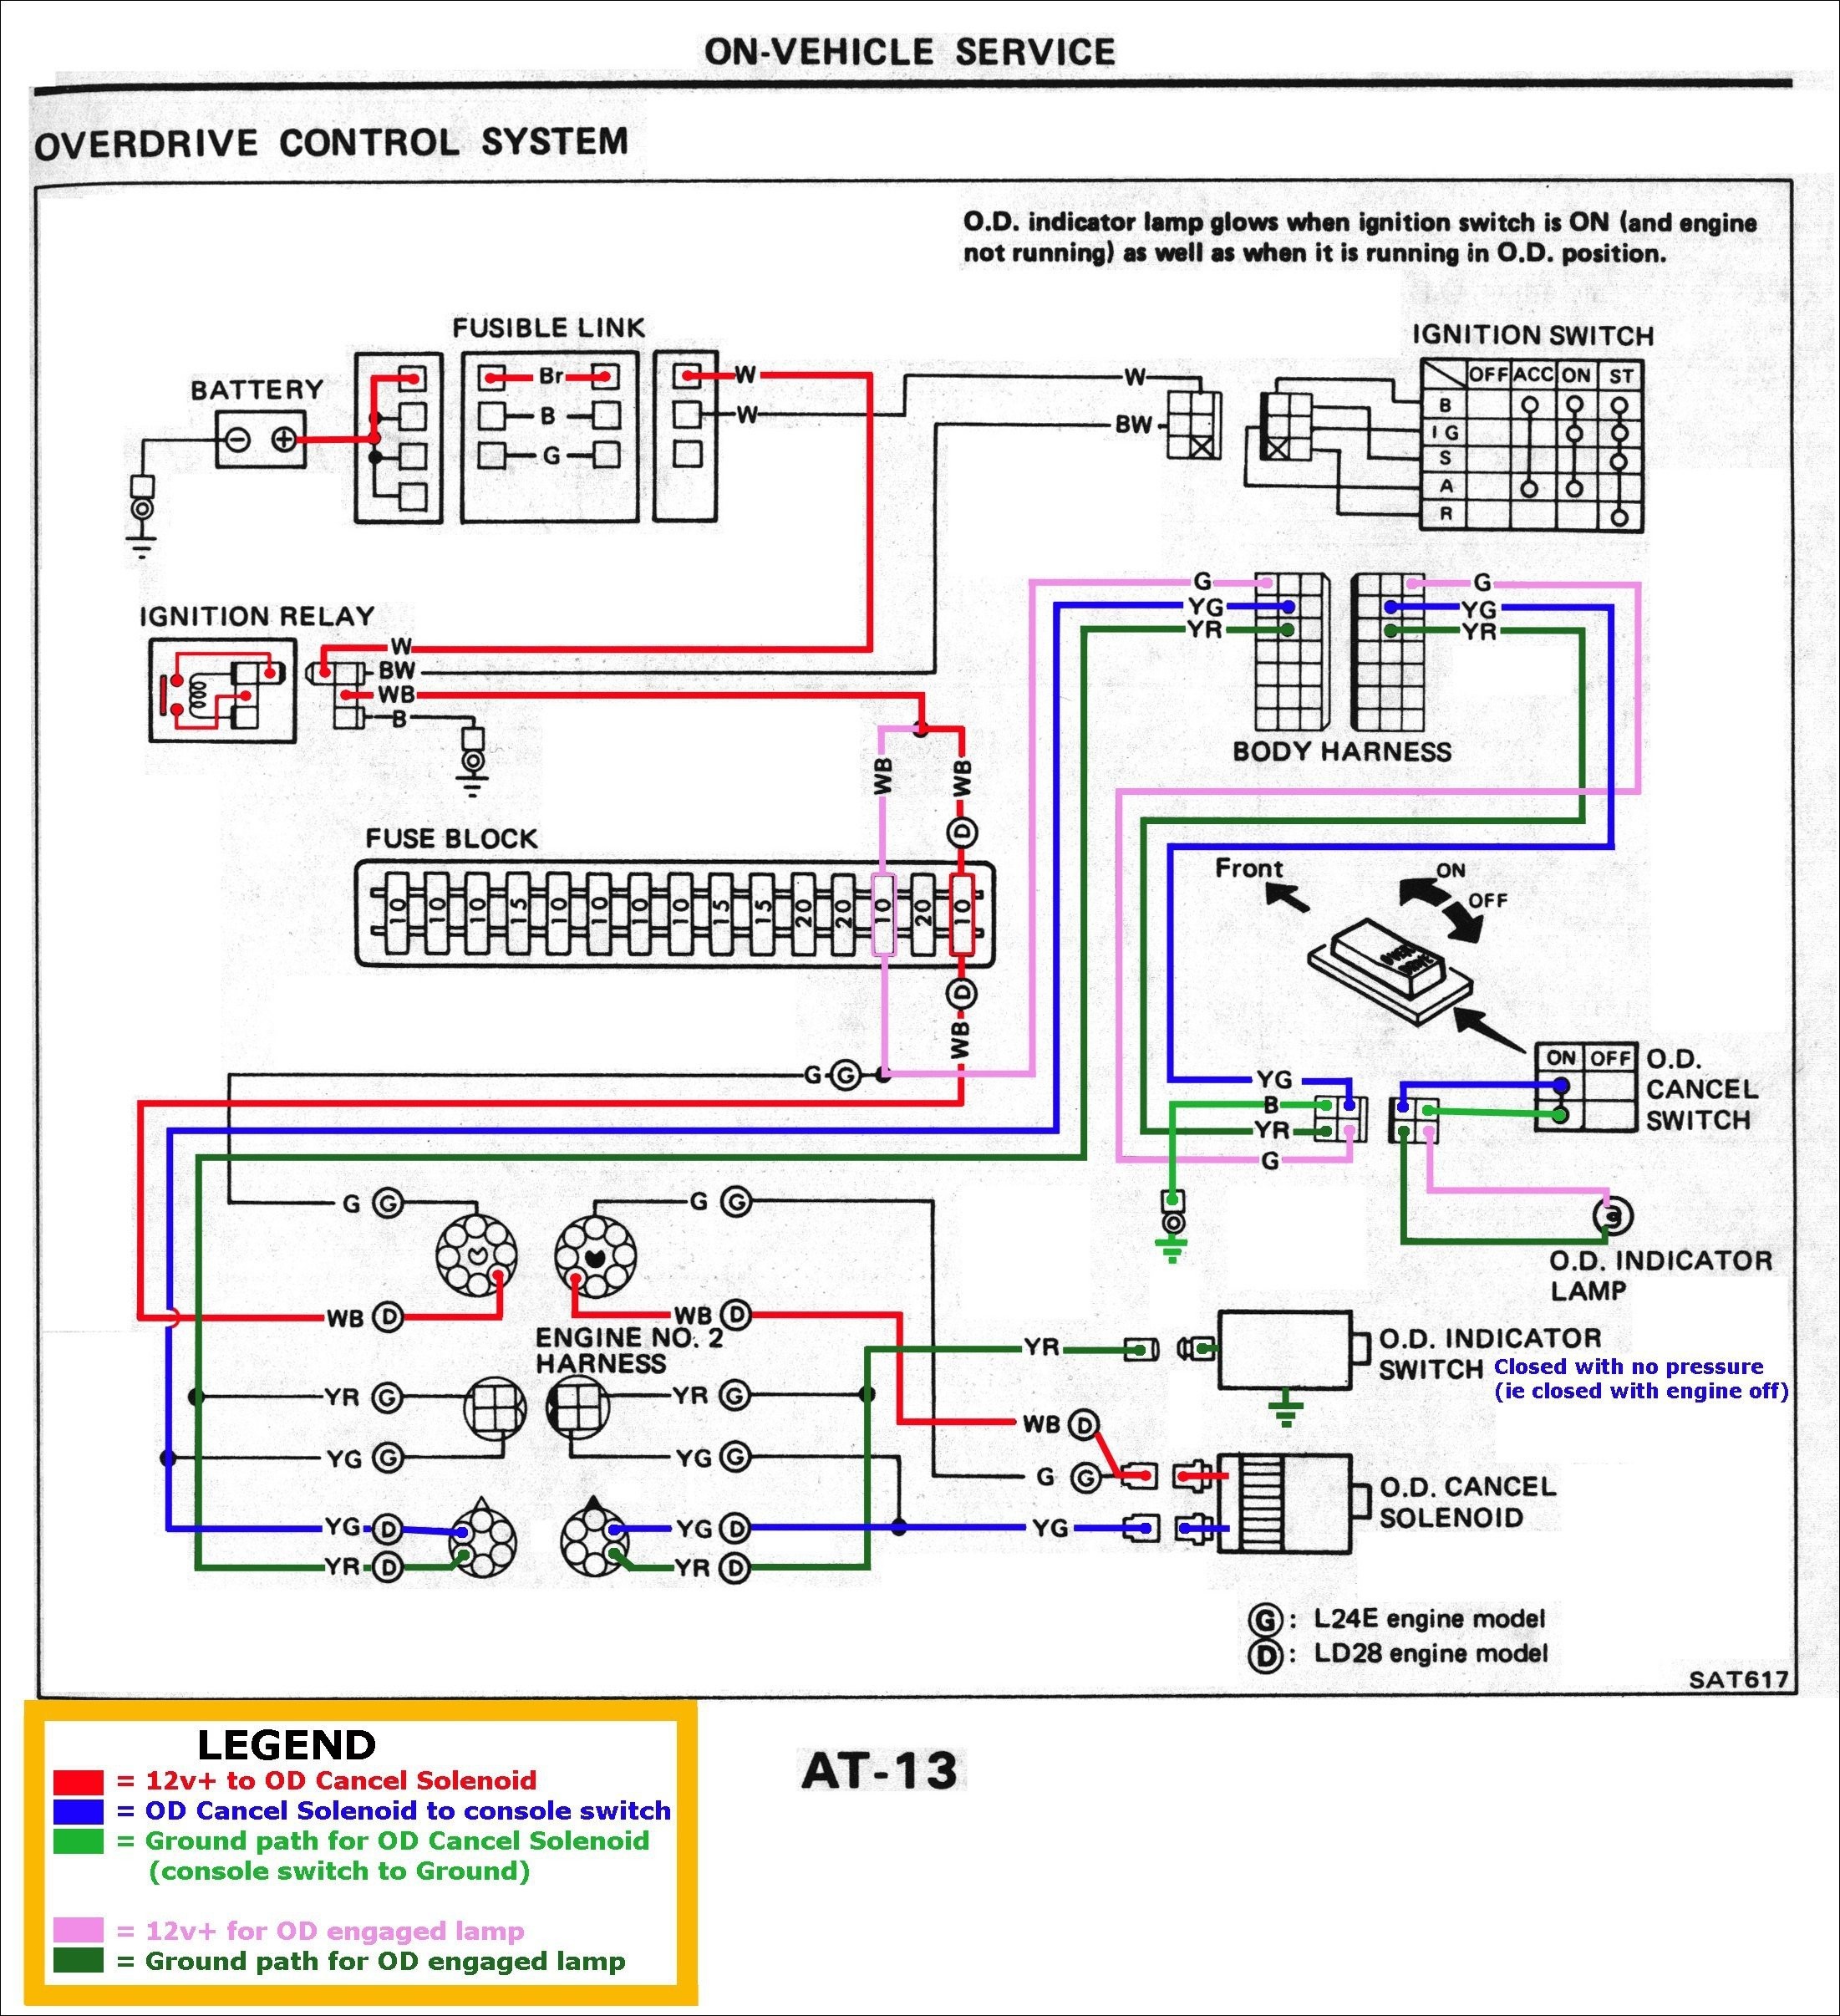 2012 Nissan Altima Engine Diagram 98 Nissan Altima Fuse Block Likewise S13 Ka24de Wiring Diagram as Of 2012 Nissan Altima Engine Diagram